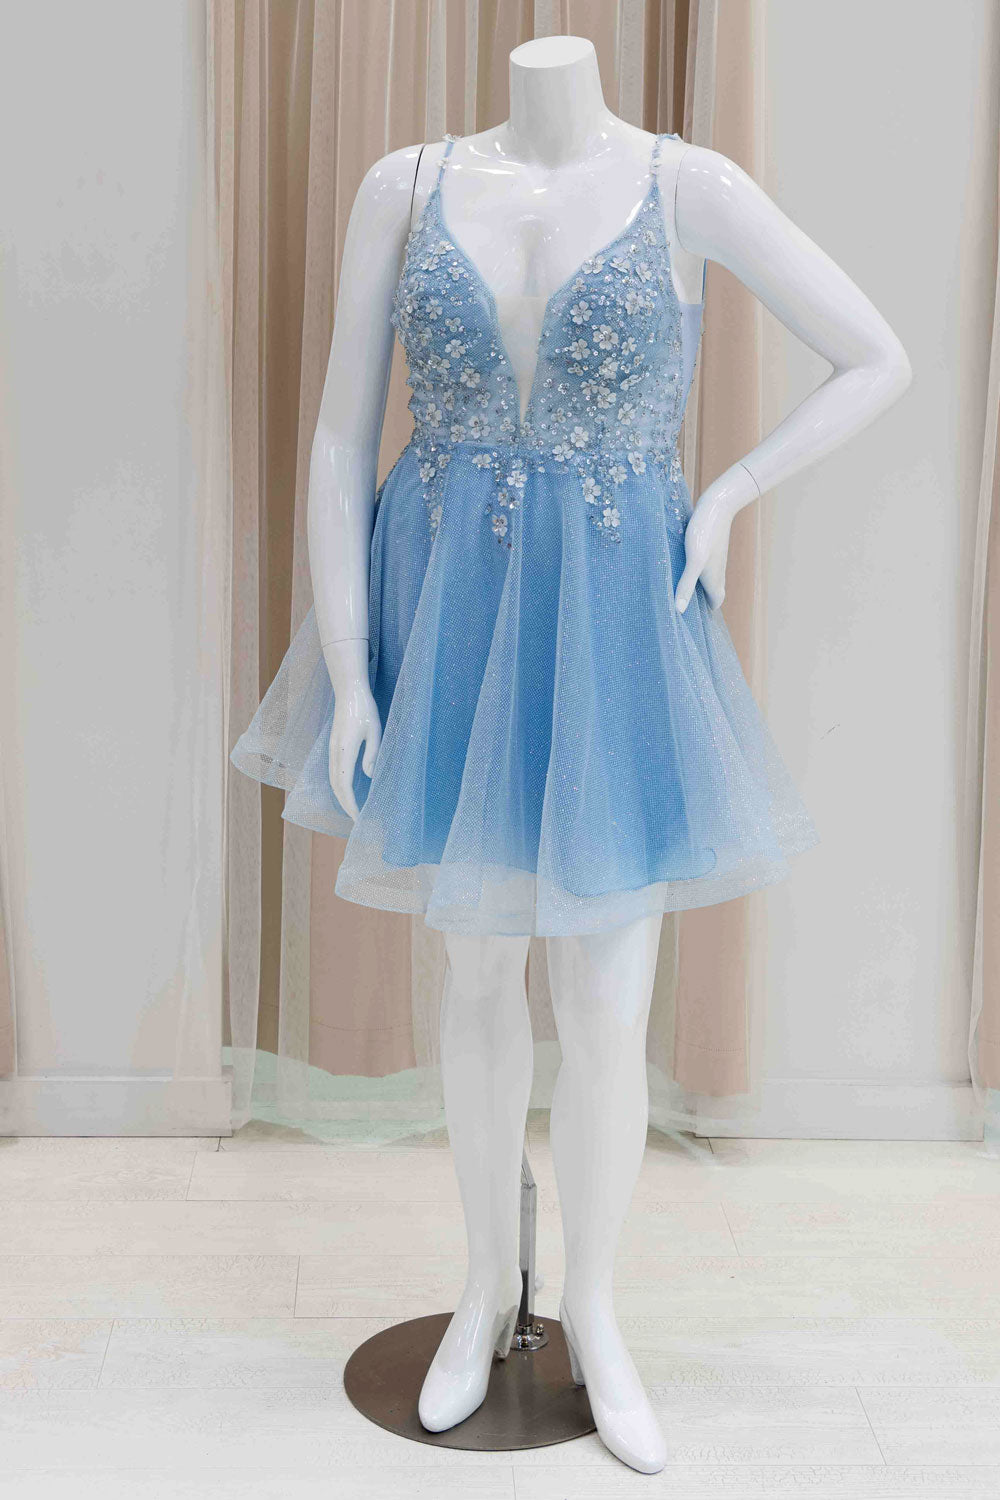 3D Flower Bodice Baby Blue Glitter Cocktail Dress